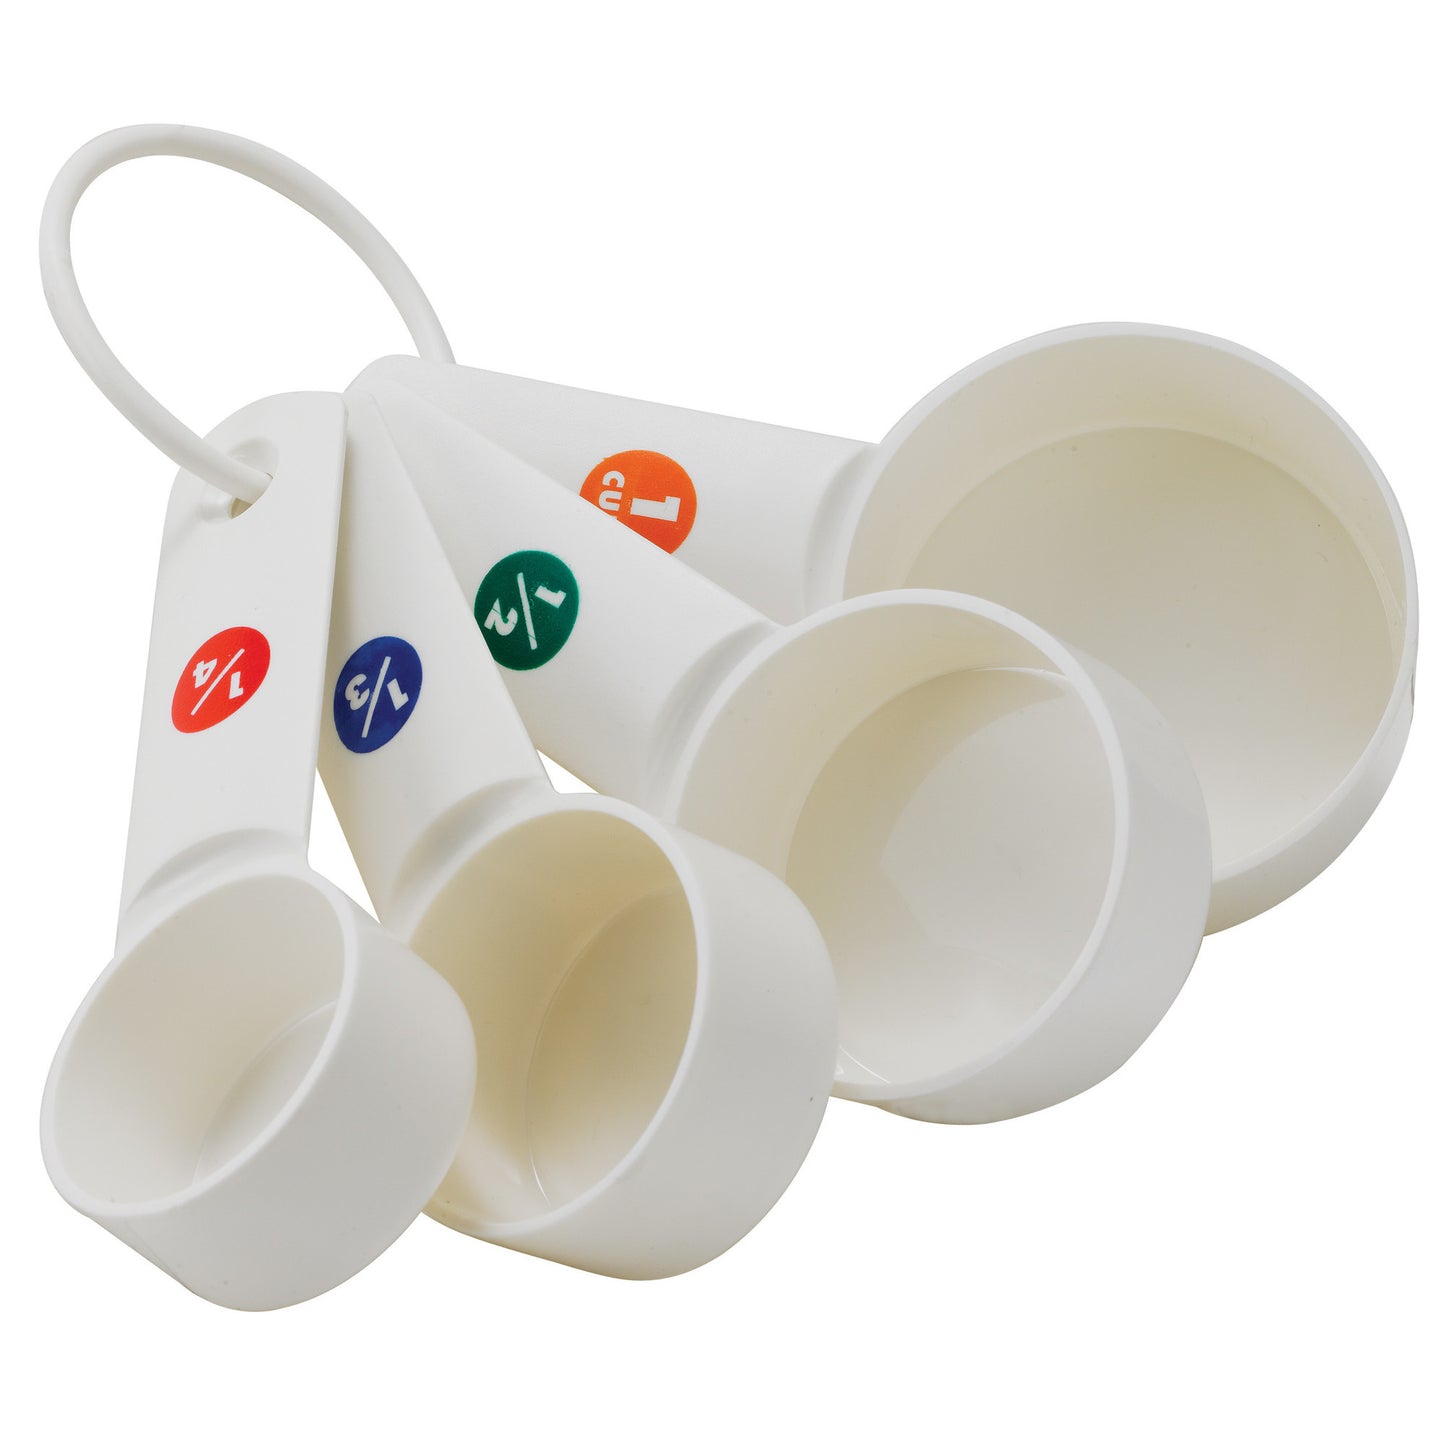 MCPP-4 - Measuring Cup Set, 4pcs, White Plastic